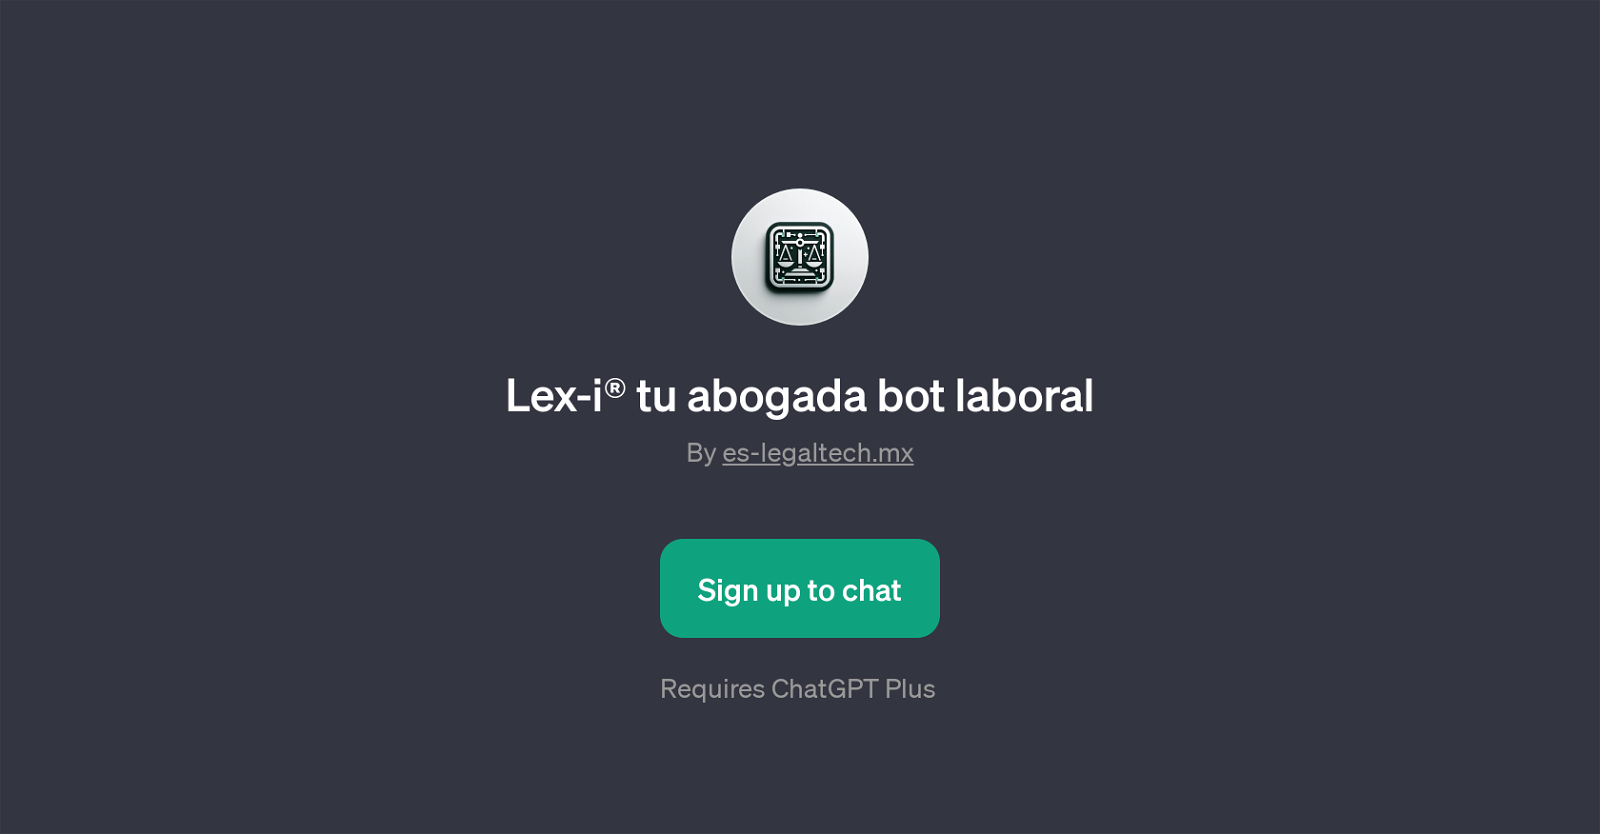 Lex-i tu abogada bot laboral website